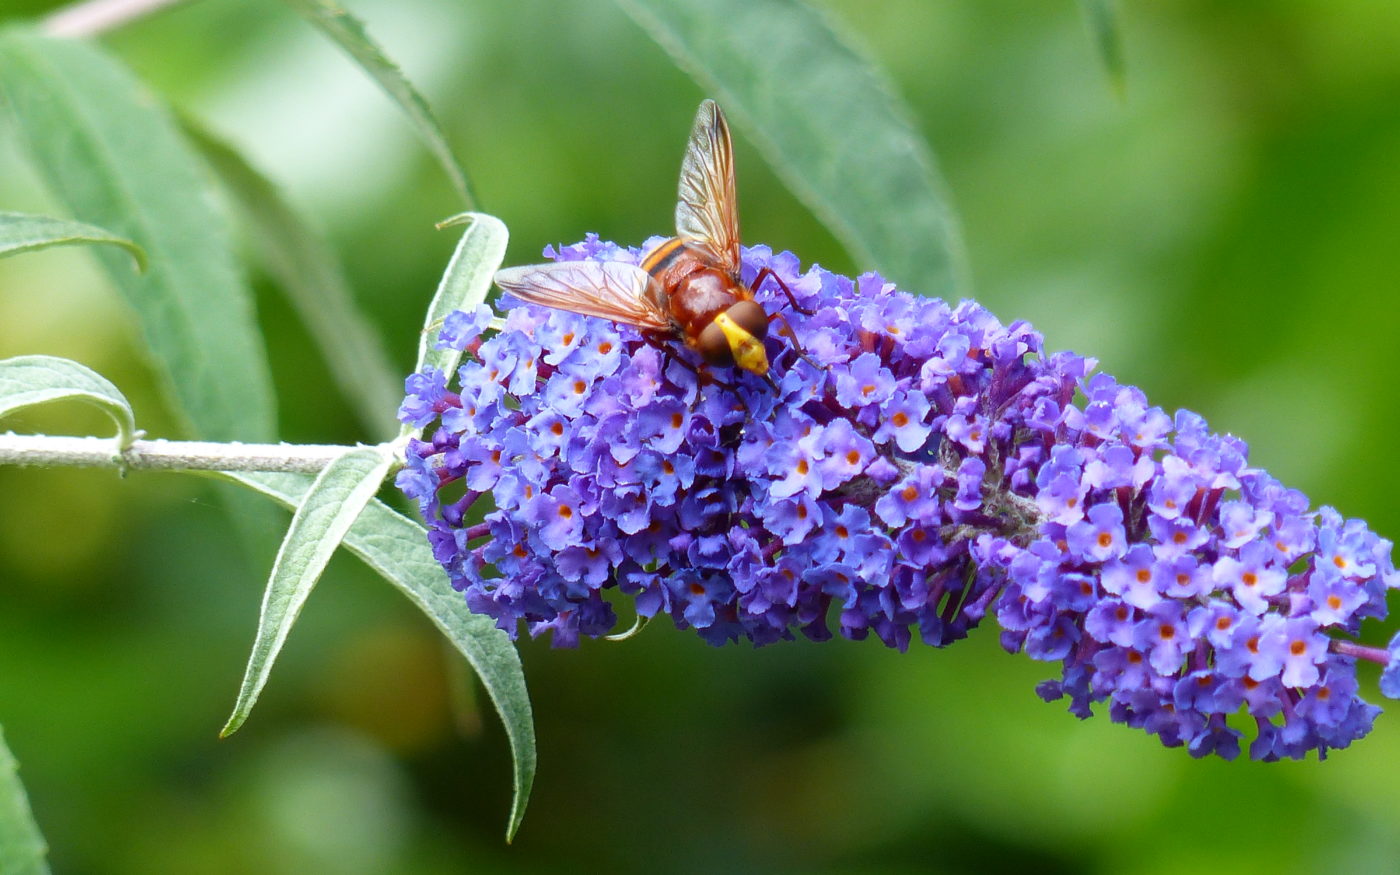 Horsefly on purple buddleia flowers